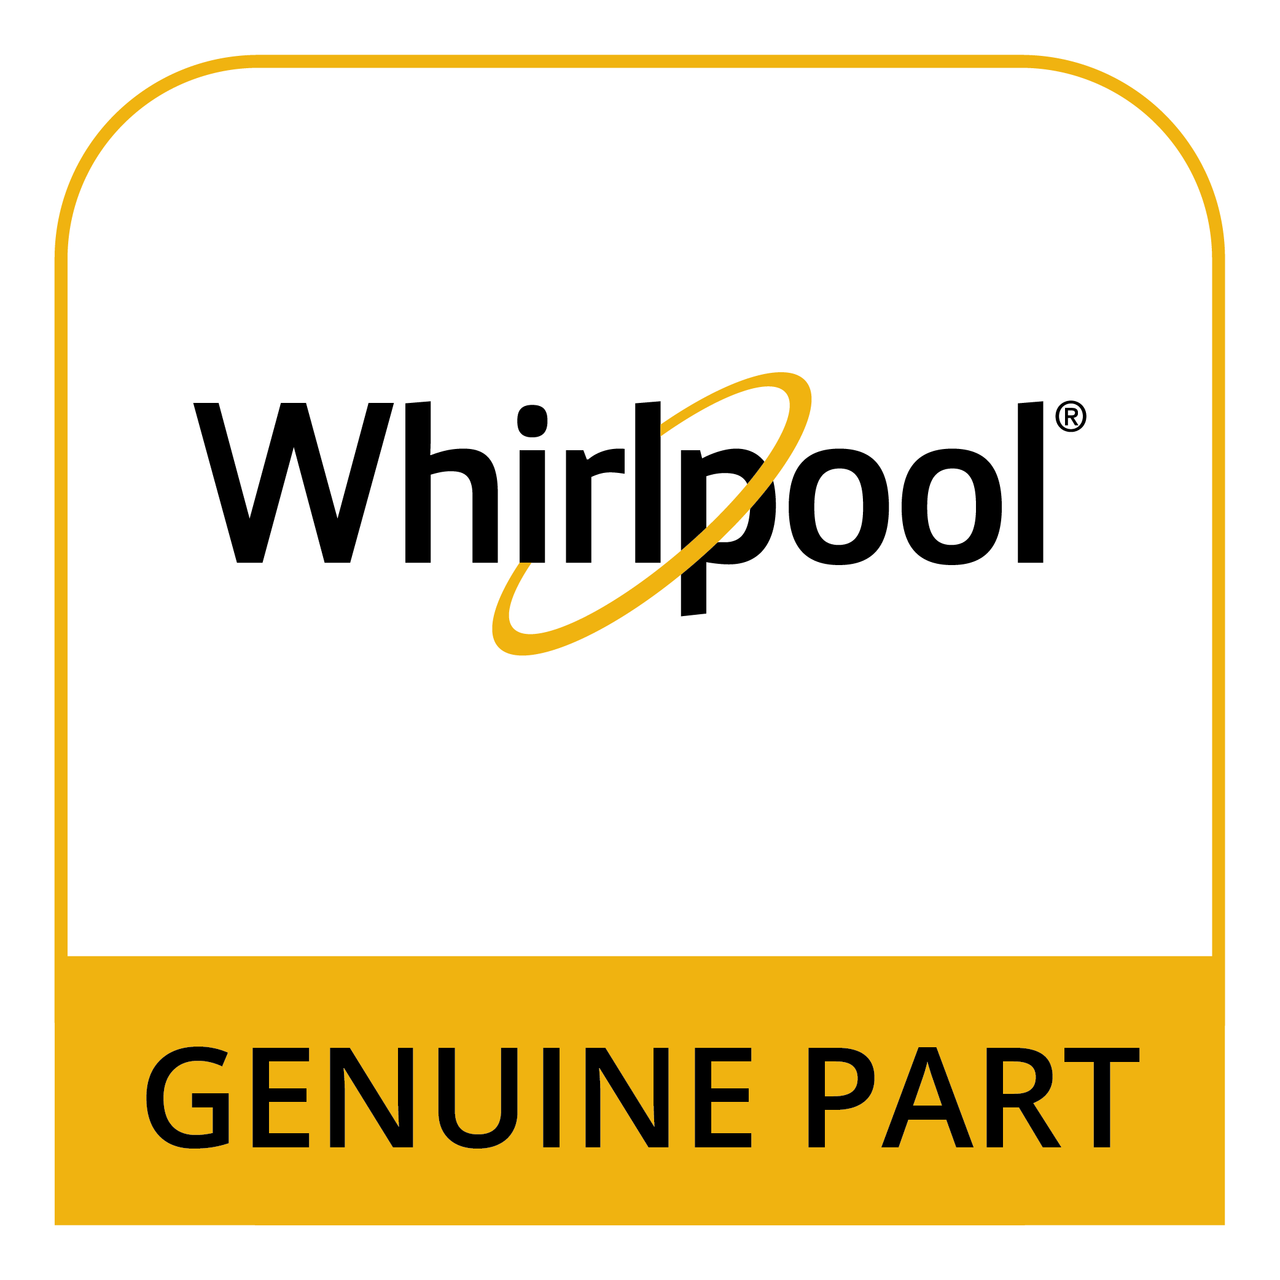 Whirlpool WP2198633 - SxS Refrigerator Emitter Cover - Genuine Part